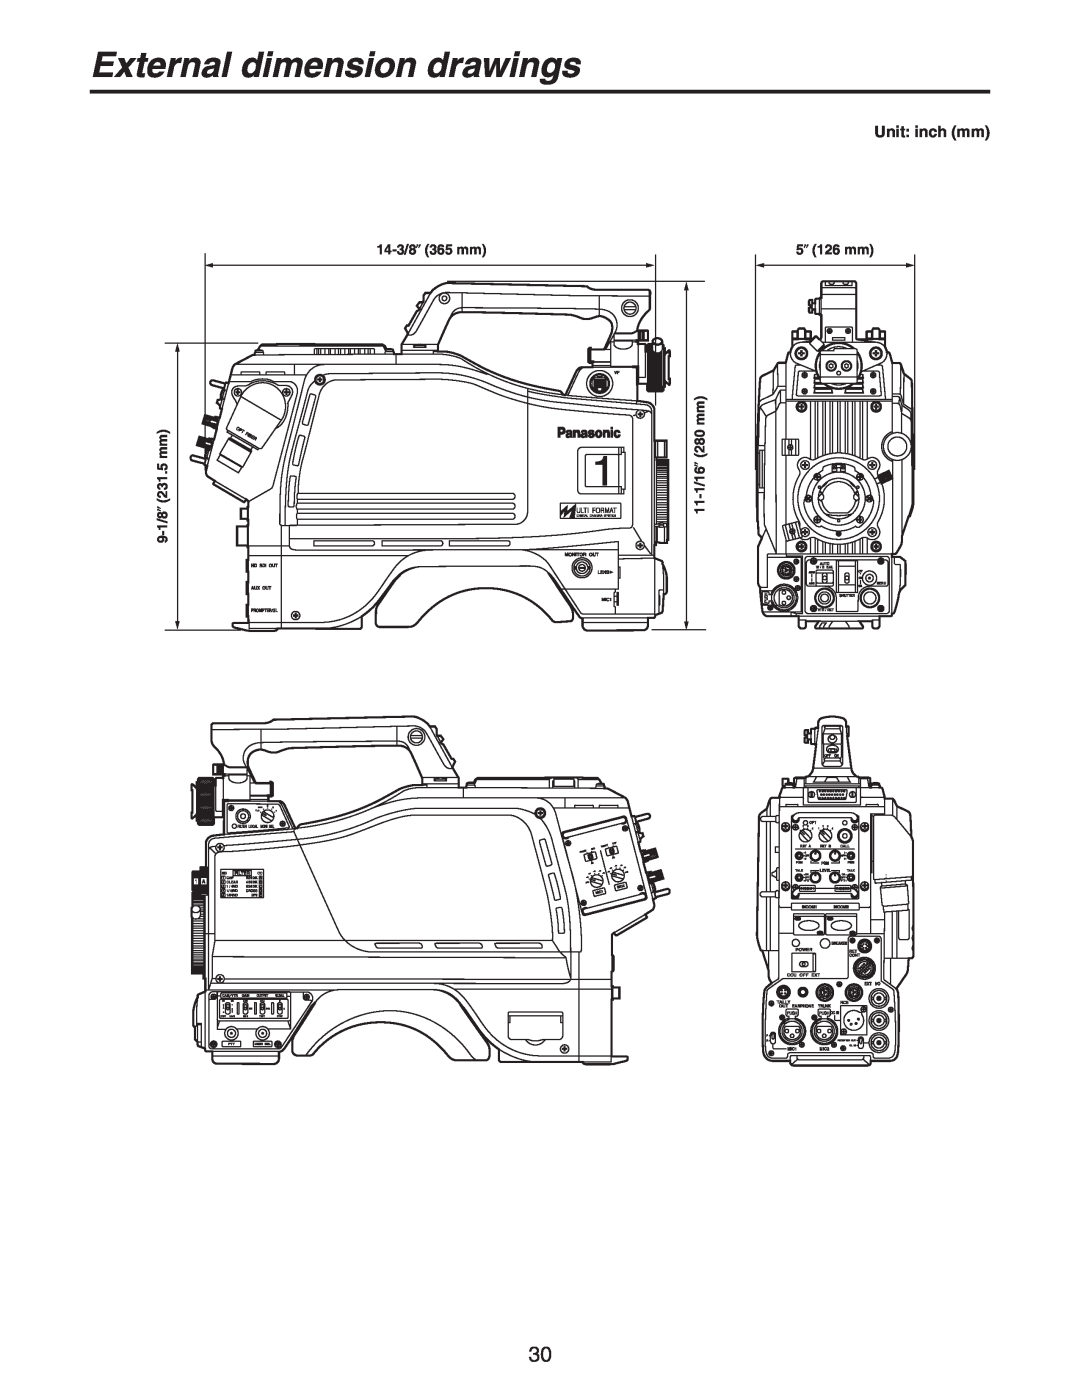 Panasonic AK-HC931BP manual External dimension drawings, Unit inch mm 